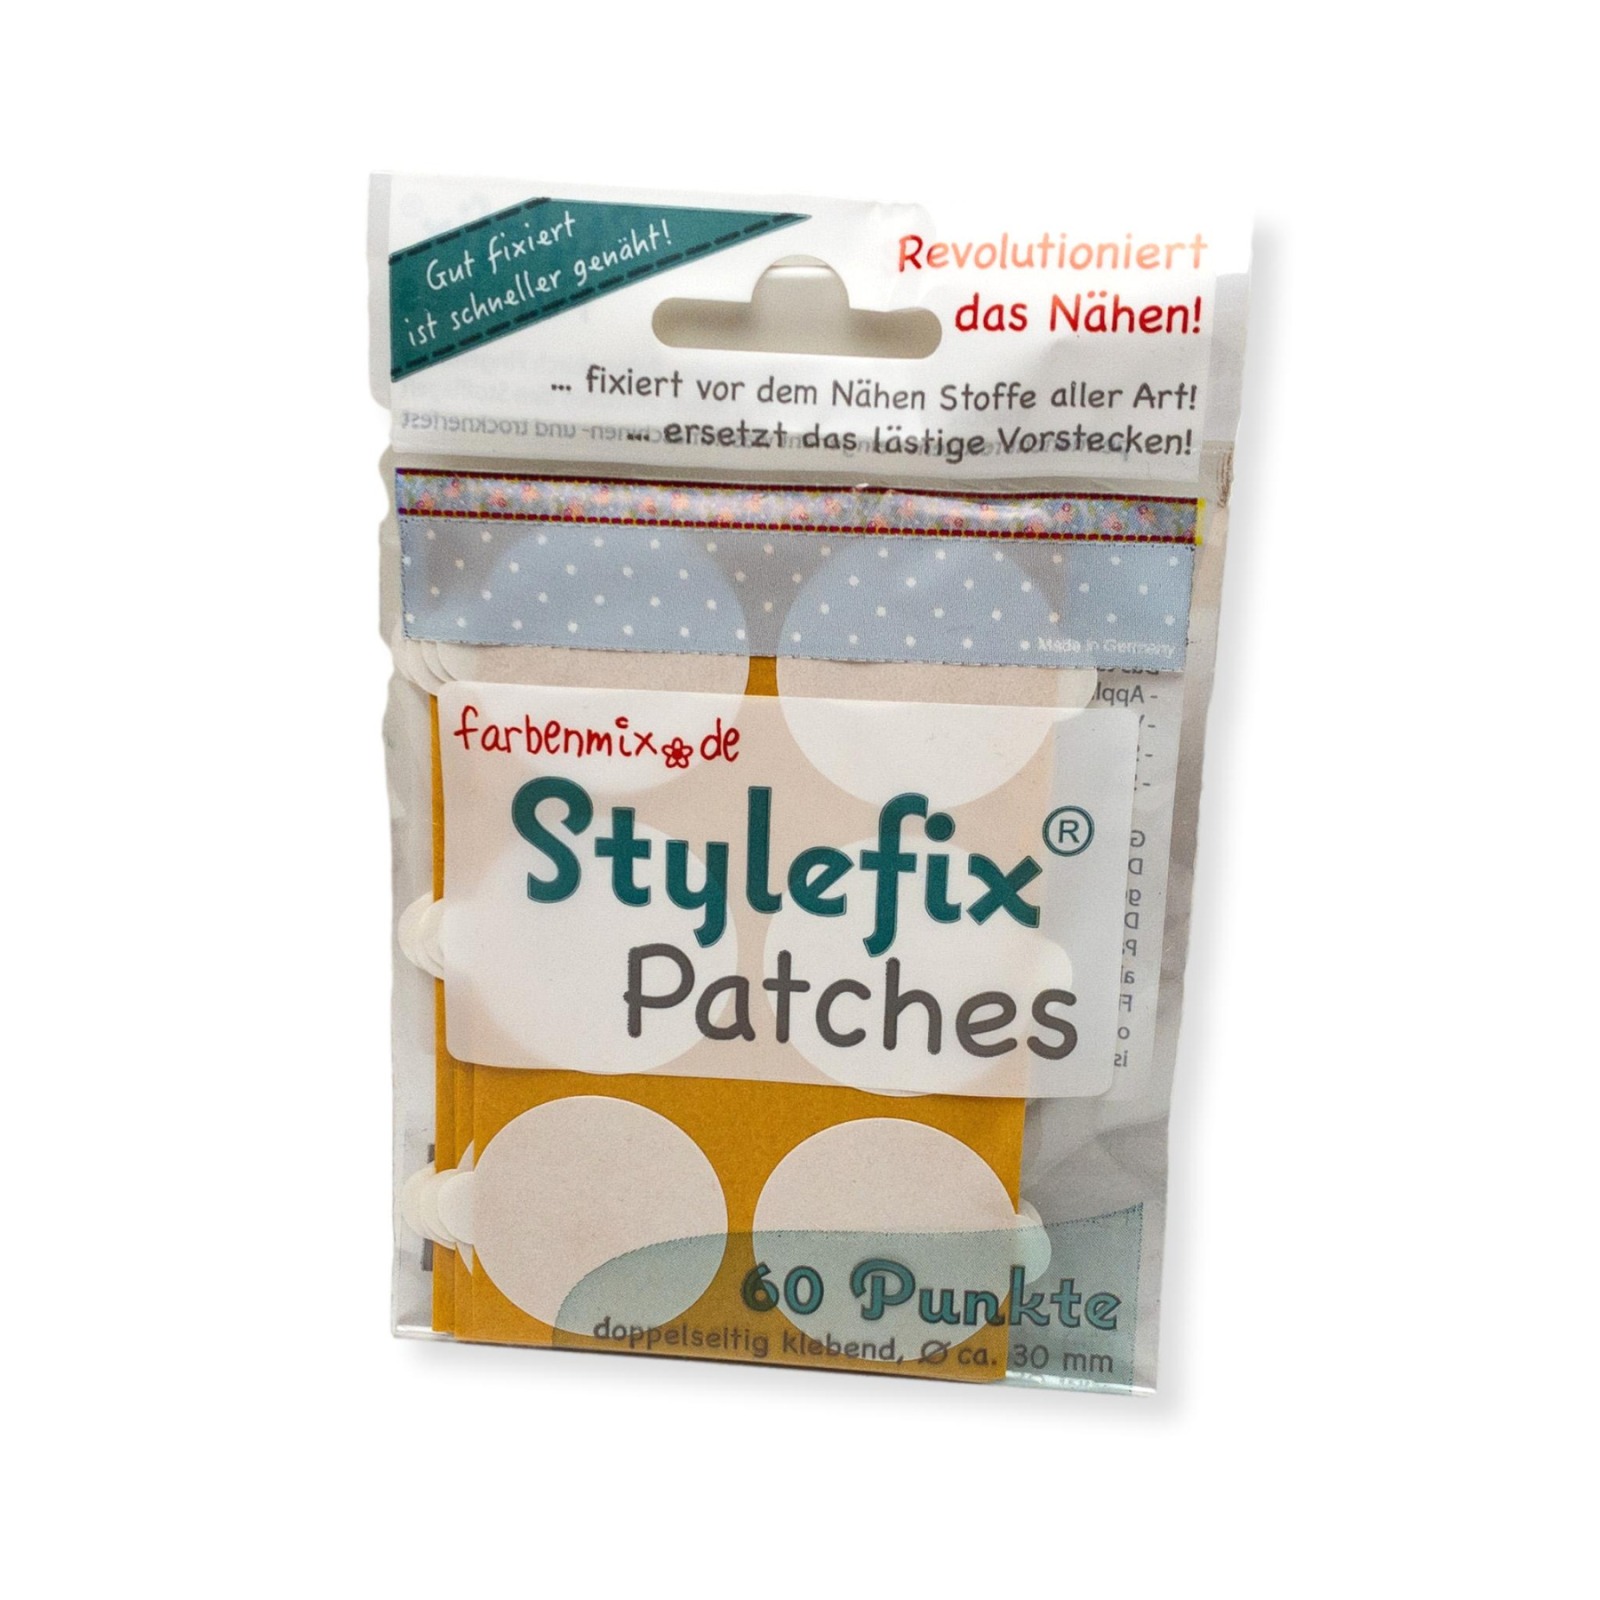 Stylefix Patches, 60 Stück